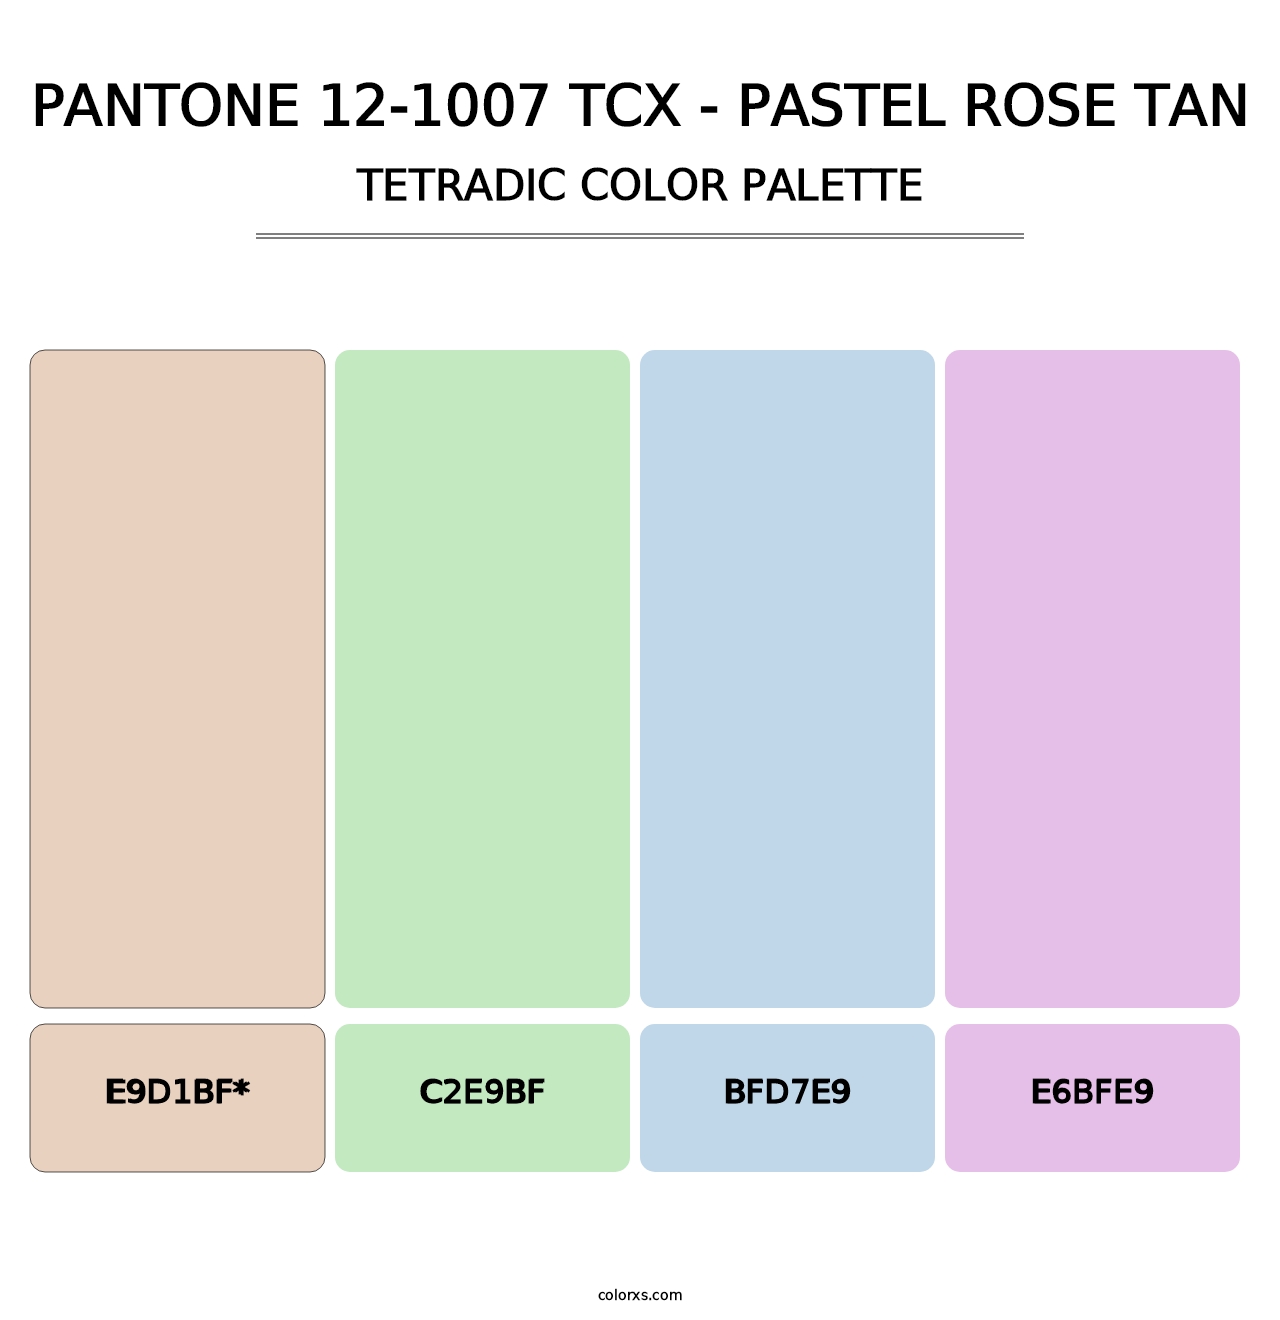 PANTONE 12-1007 TCX - Pastel Rose Tan - Tetradic Color Palette